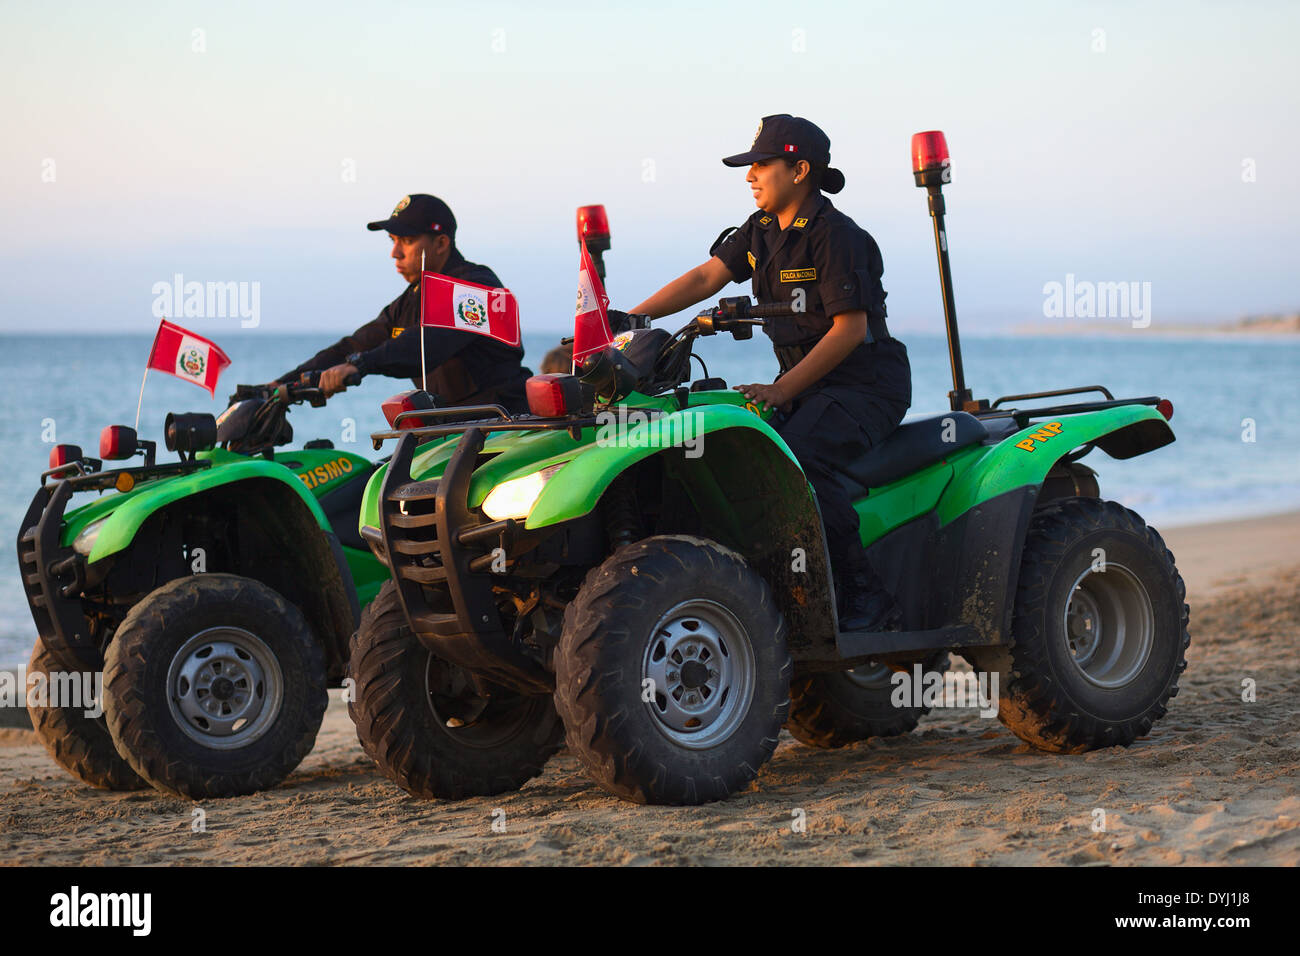 Unidentified policewoman and policeman on Honda all-terrain vehicles on the sandy beach in Mancora, Peru Stock Photo